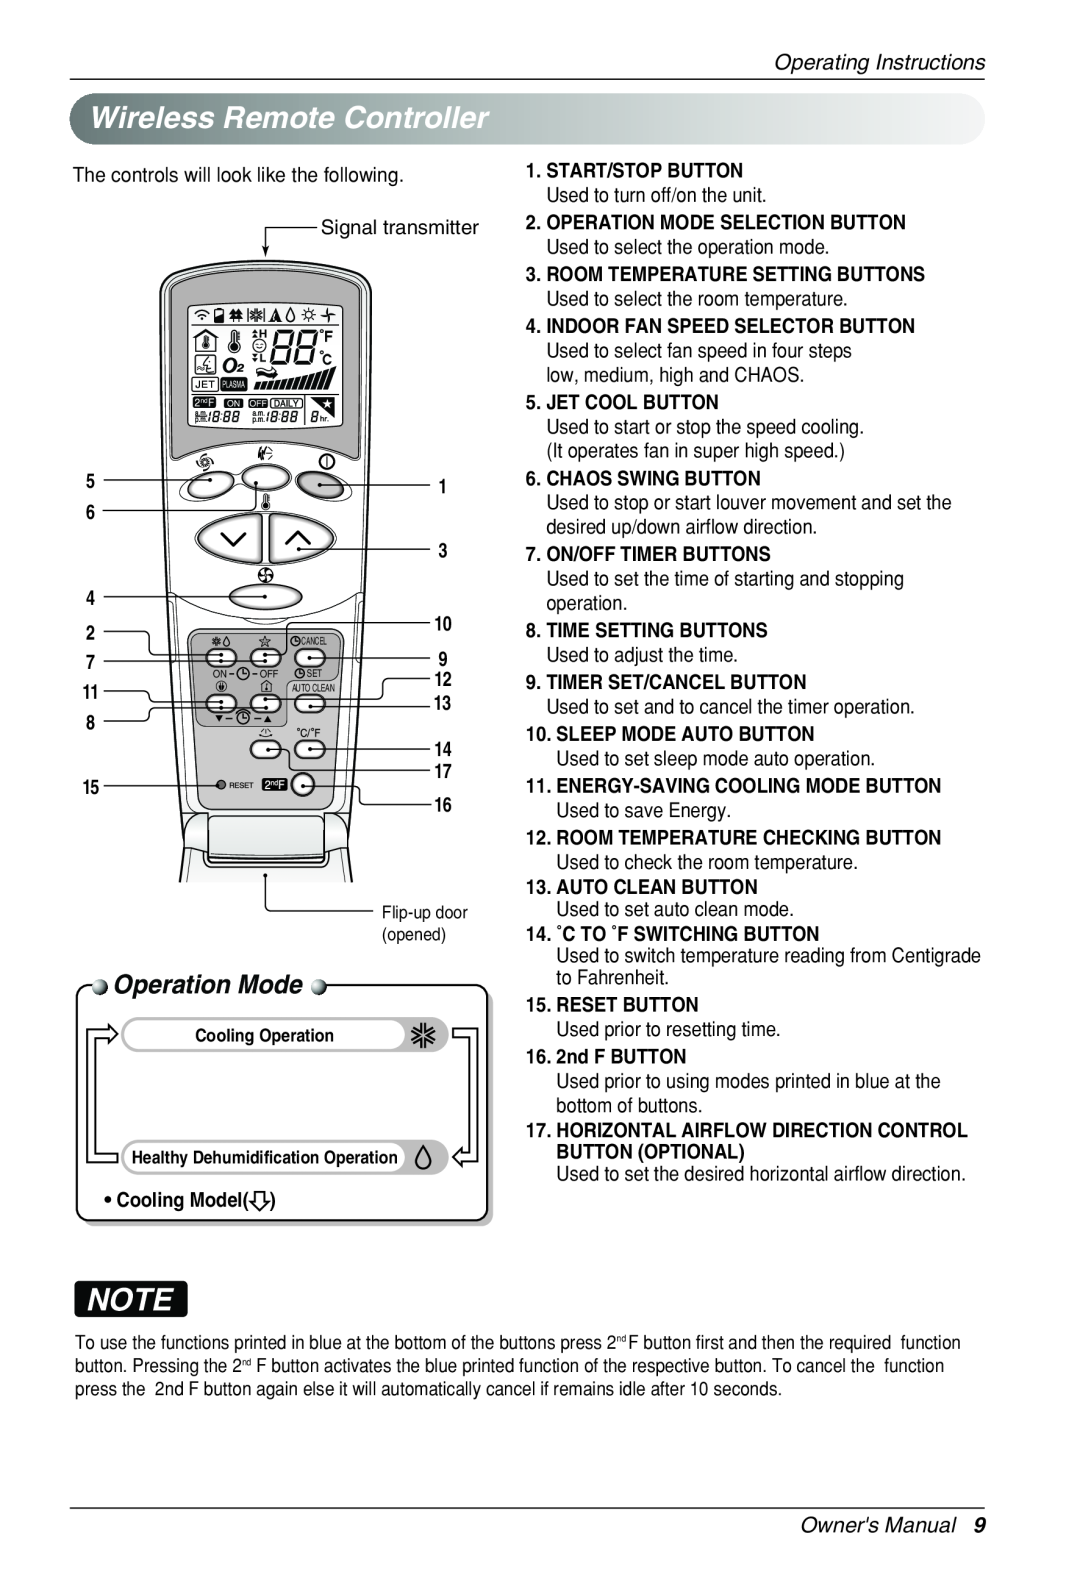 Heat Controller VMC30SB-1 manual WirelessRemoteController, Operation Mode, Operating Instructions 